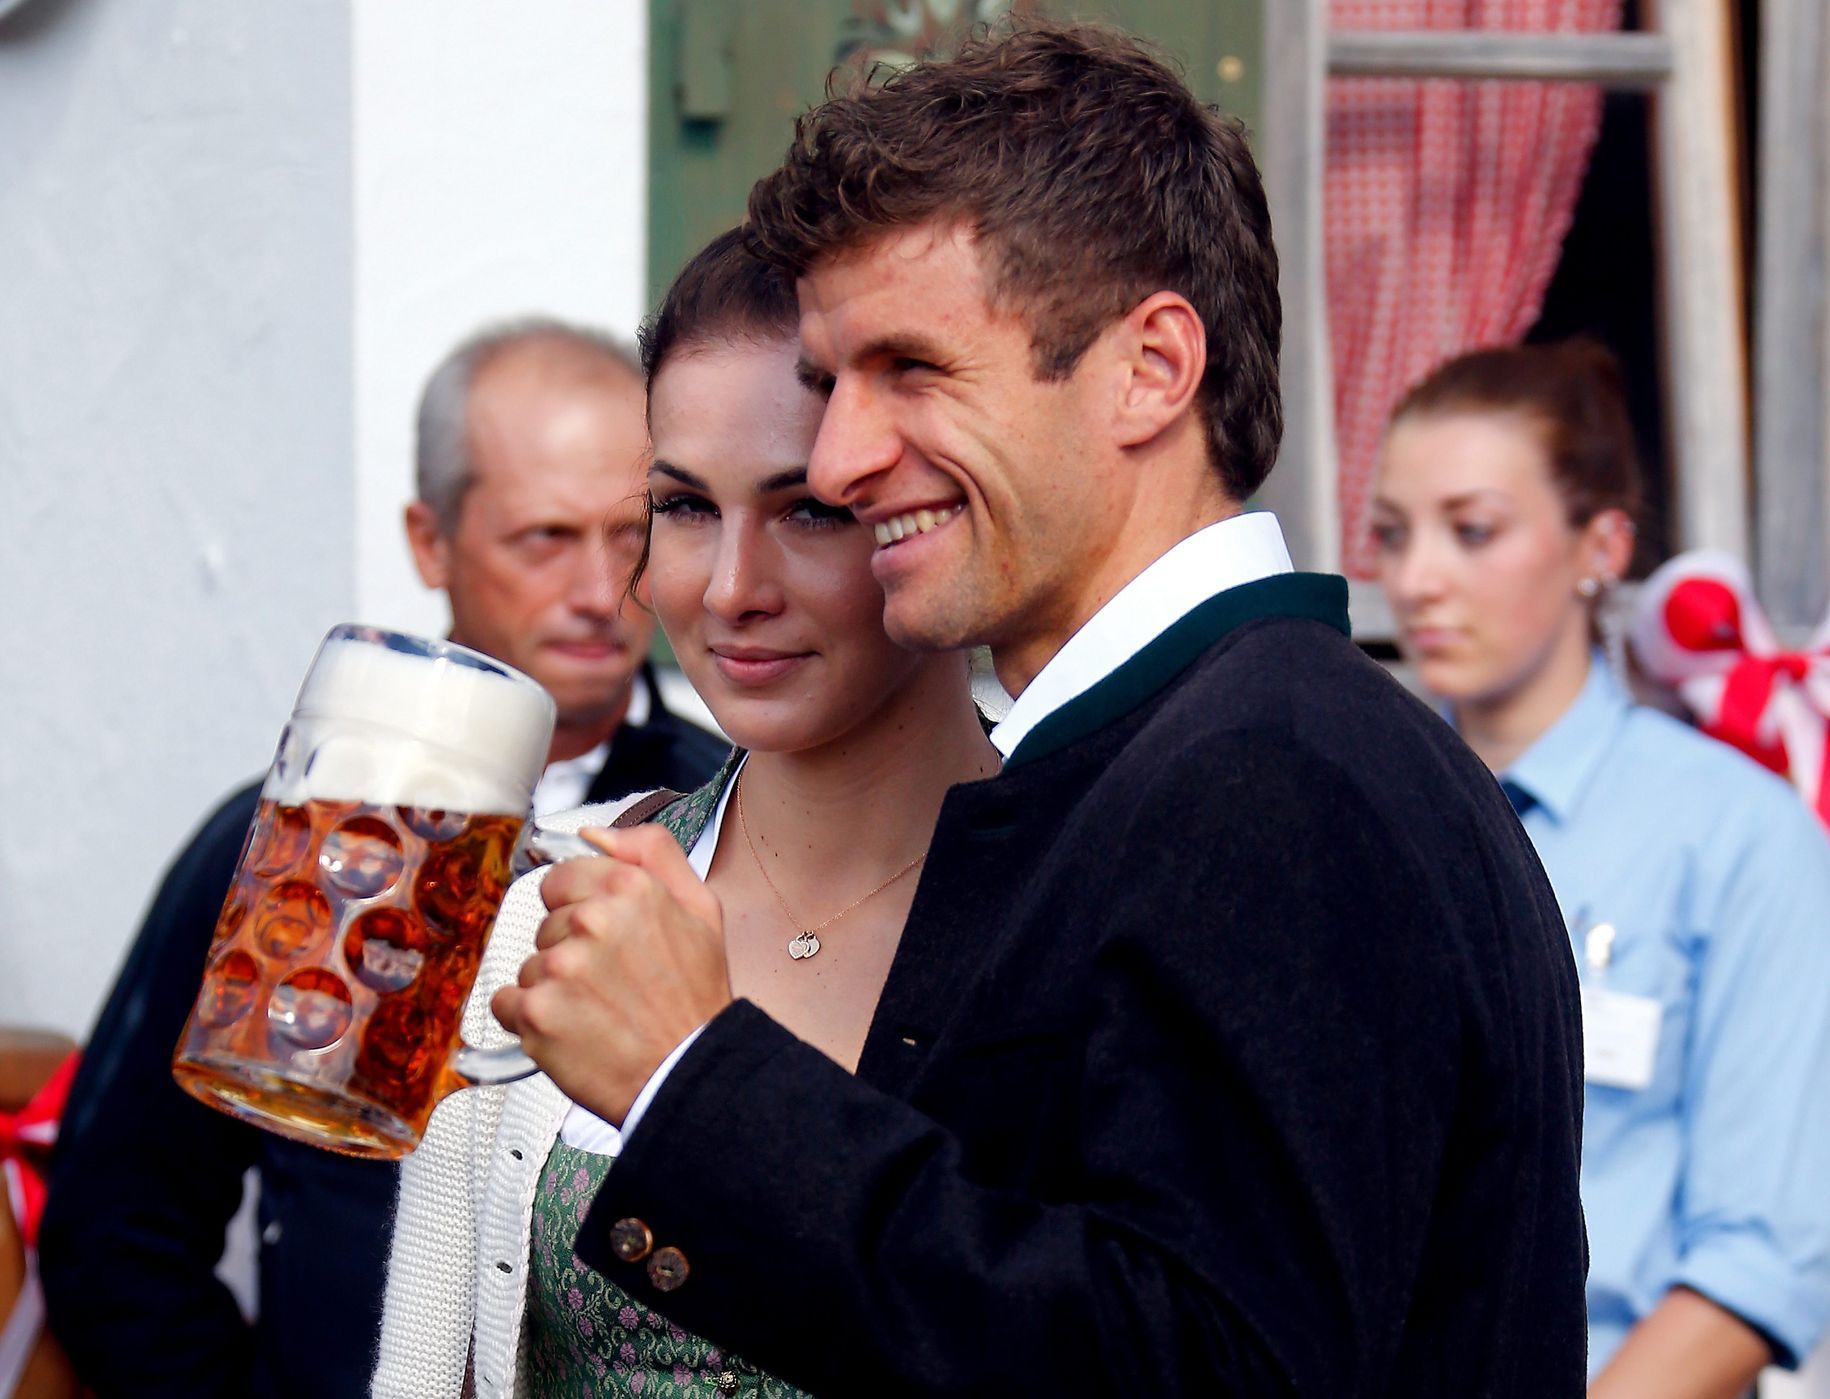 Bayern Mnichov na Oktoberfestu 2015: Thomas Müller a manželka Lisa